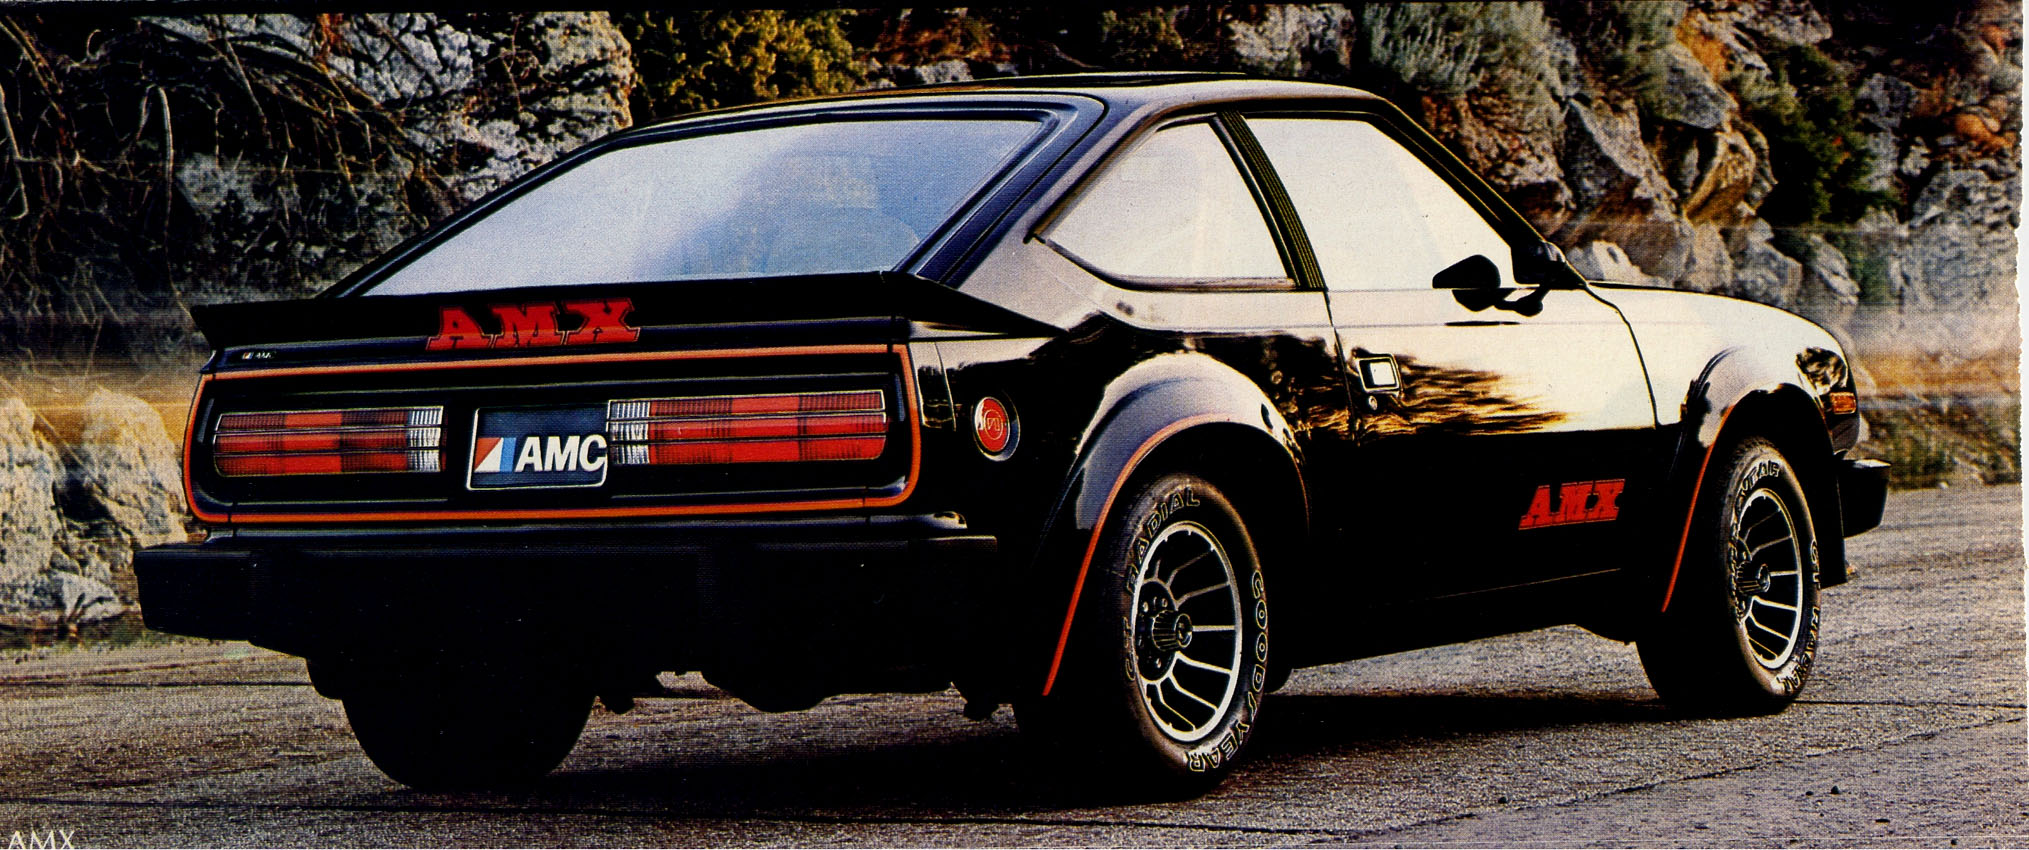 1979 AMC-07